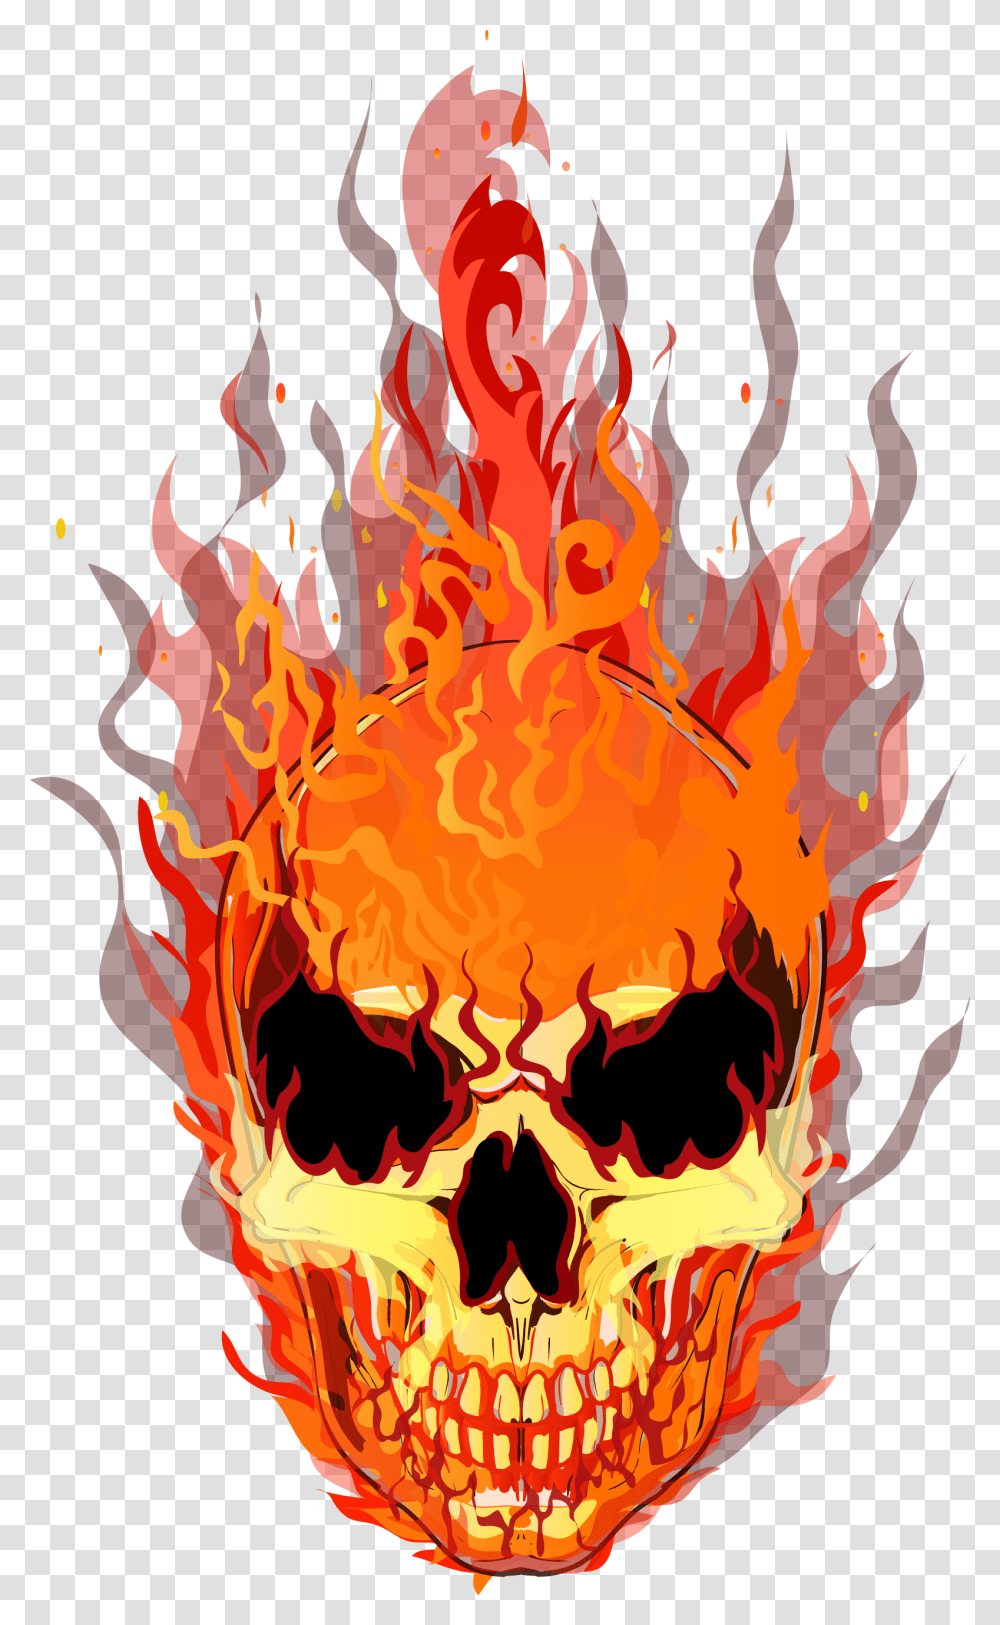 Fire Vector Flame Skull Download Hq Free Fire Vector, Bonfire Transparent Png